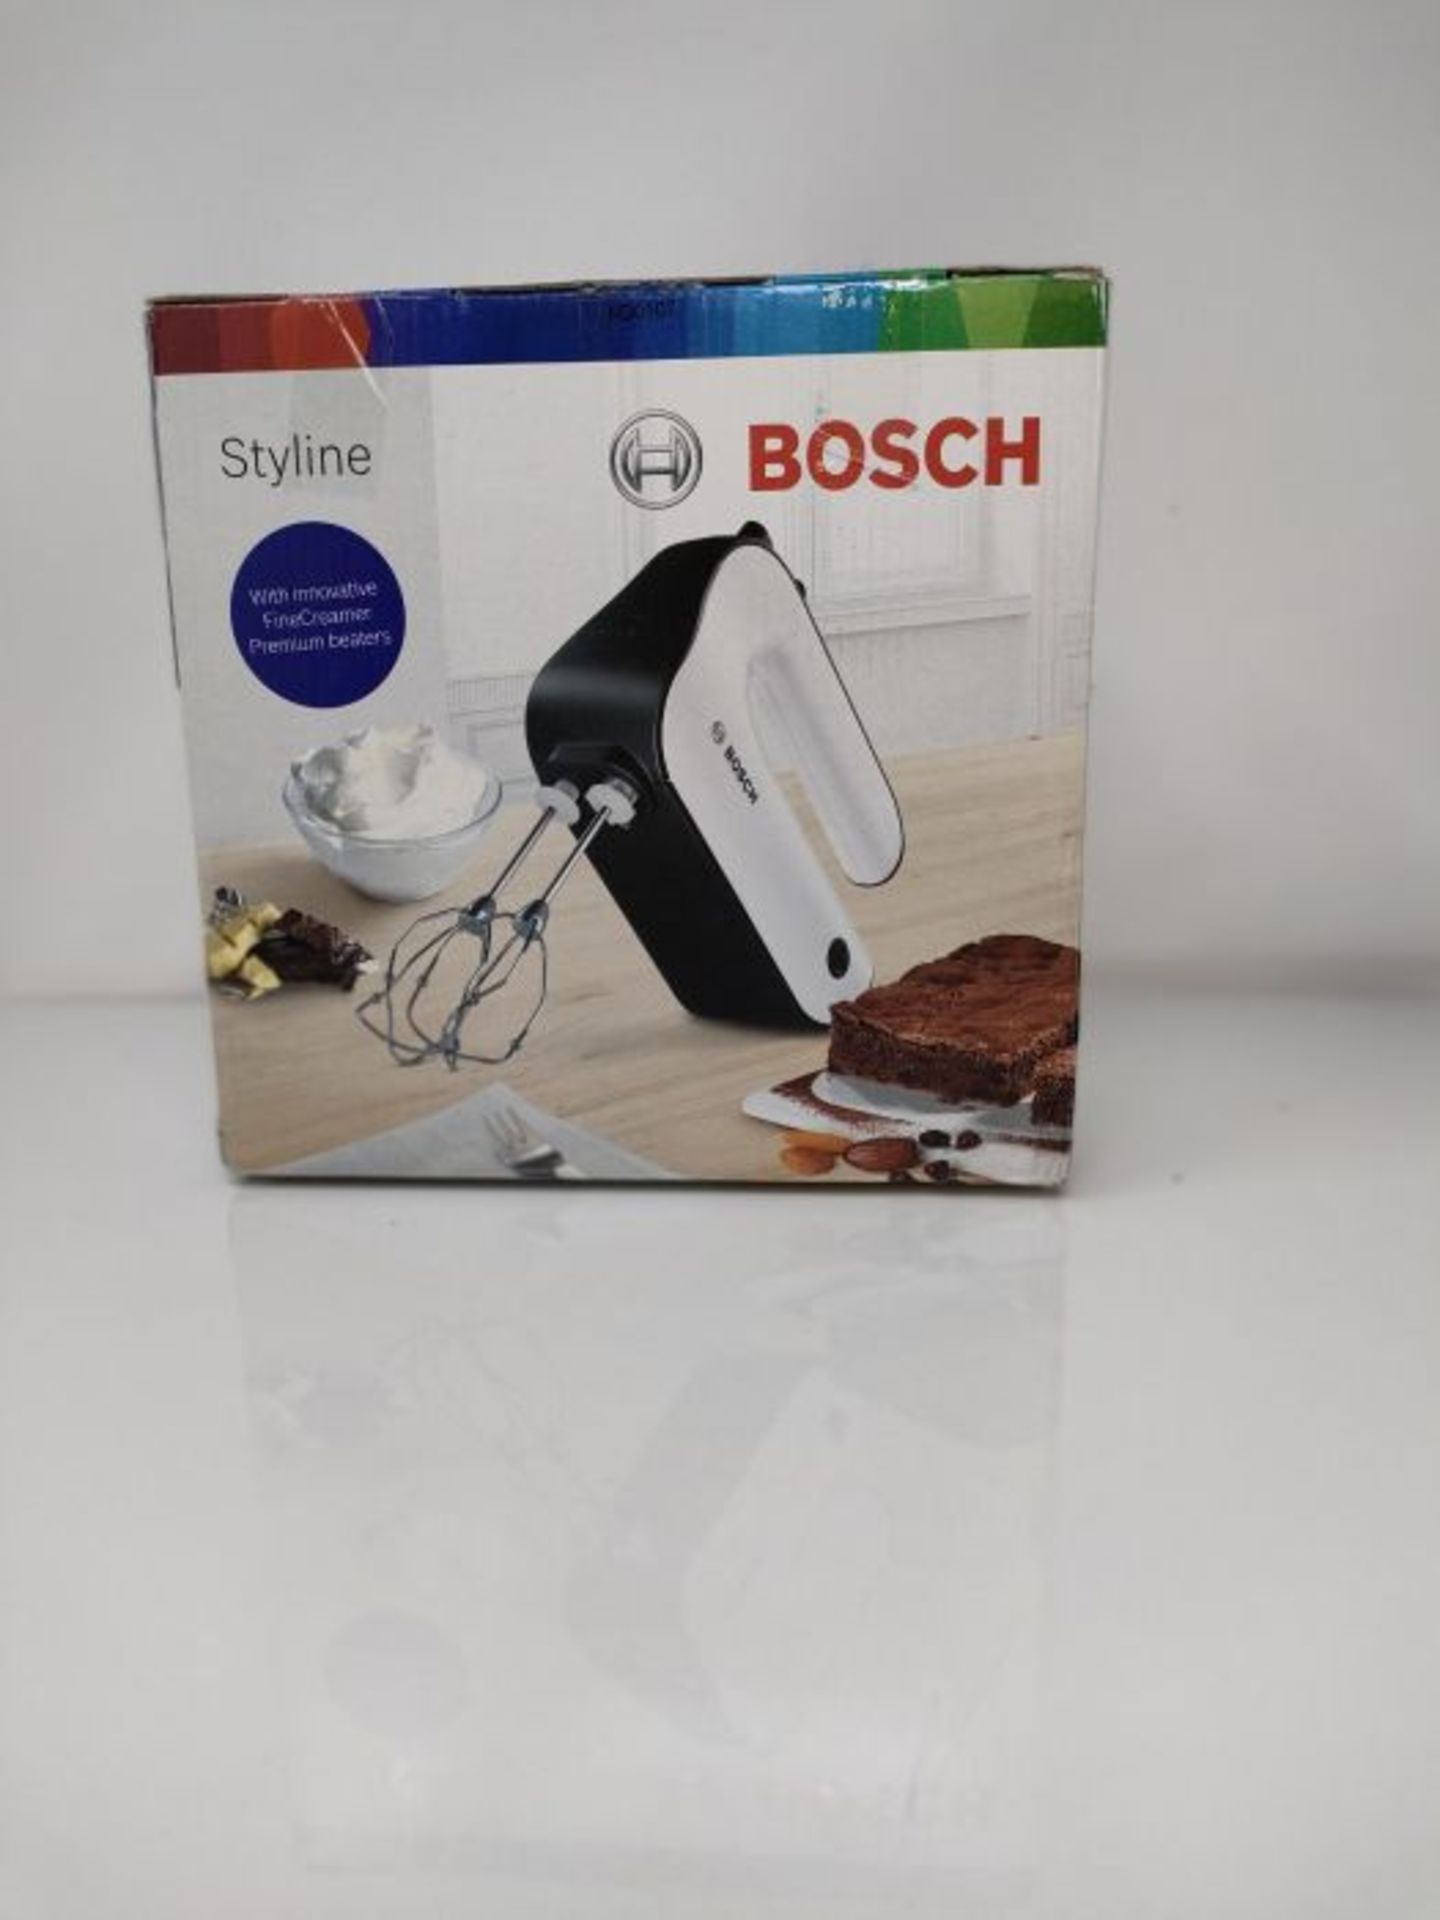 Bosch MFQ 4020 - Image 2 of 3